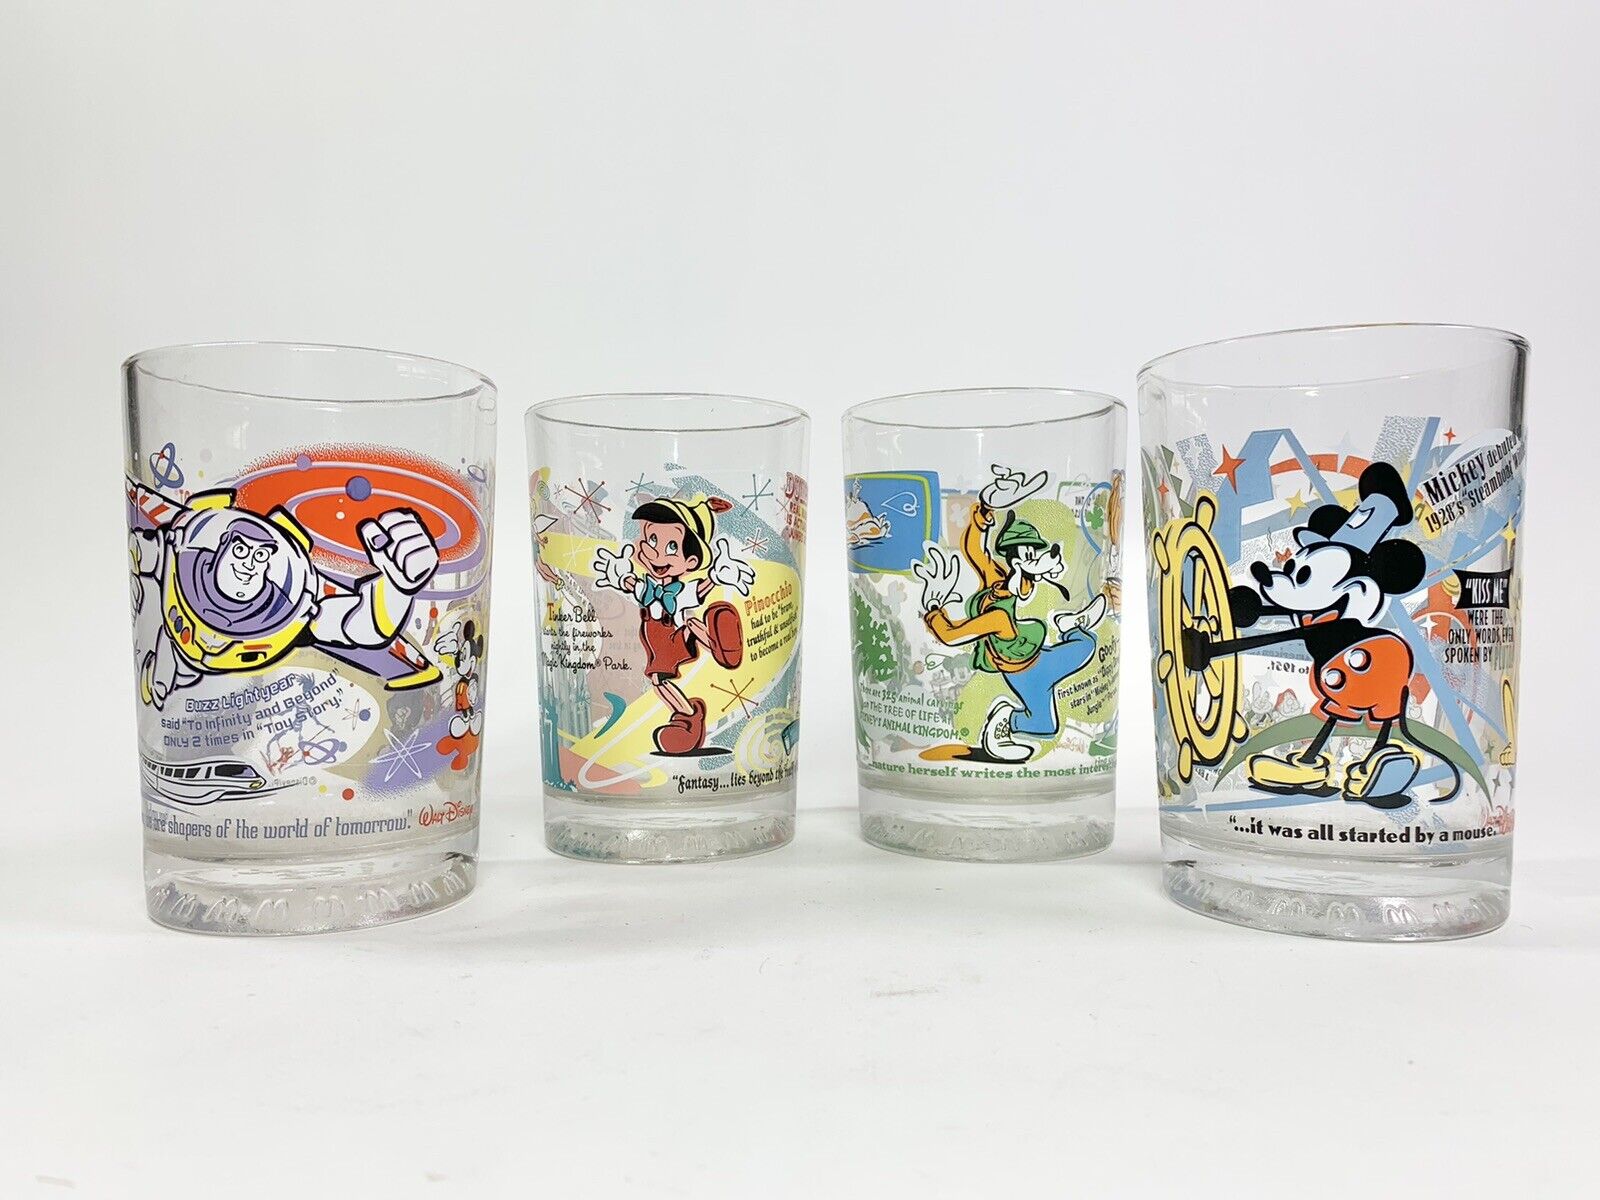 McDonalds Disney World 100 Years of Magic 25th Anniversary Cups Glasses Set of 4